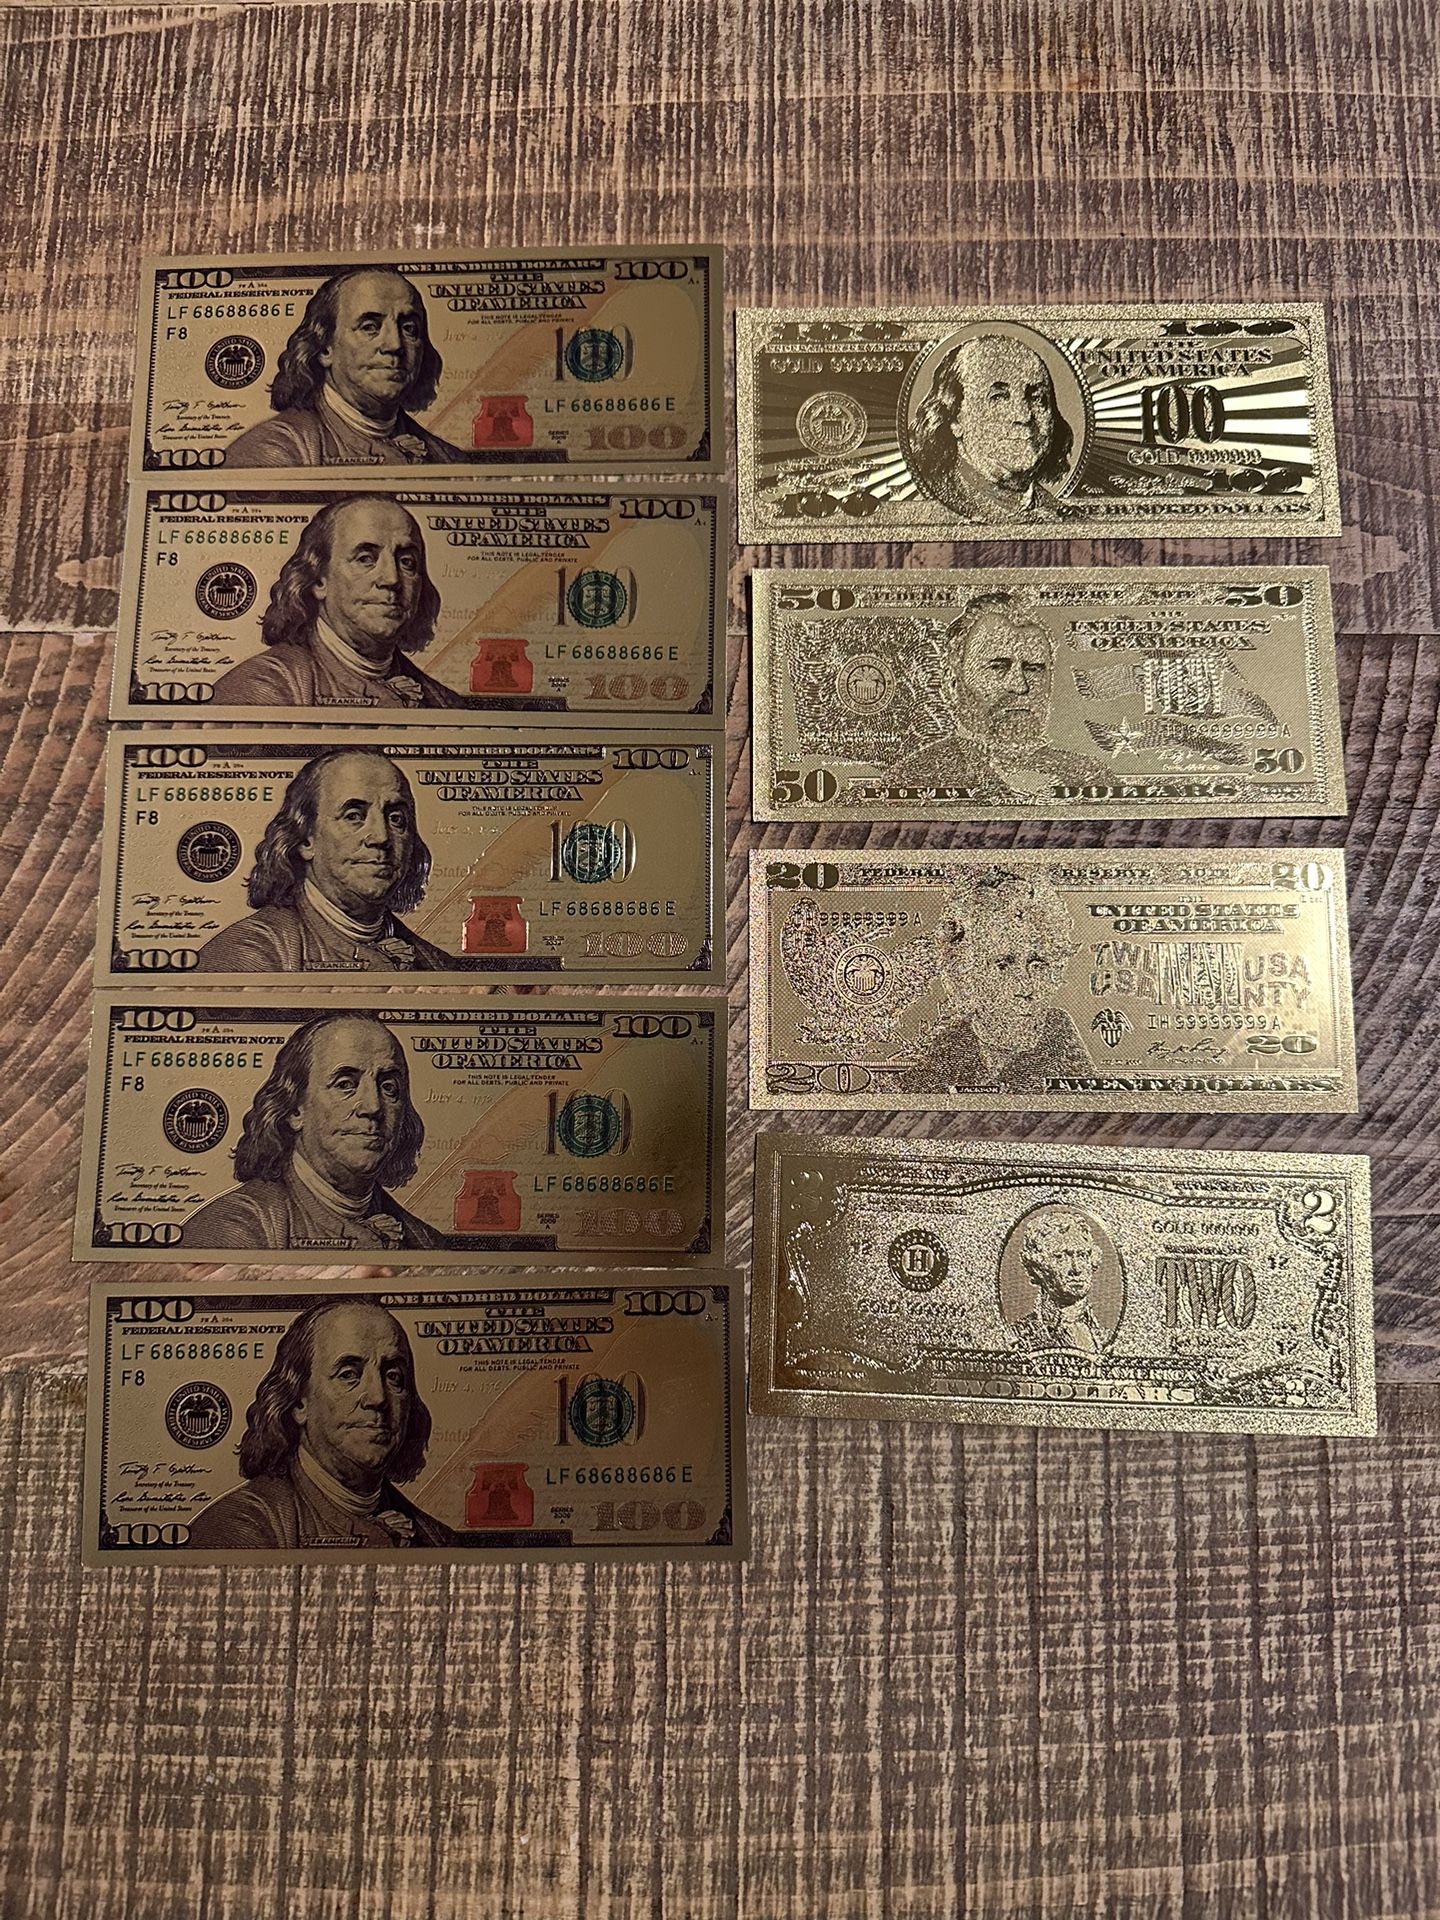 9 Piece Gold Novelty Bills $100 $50 $20 $2